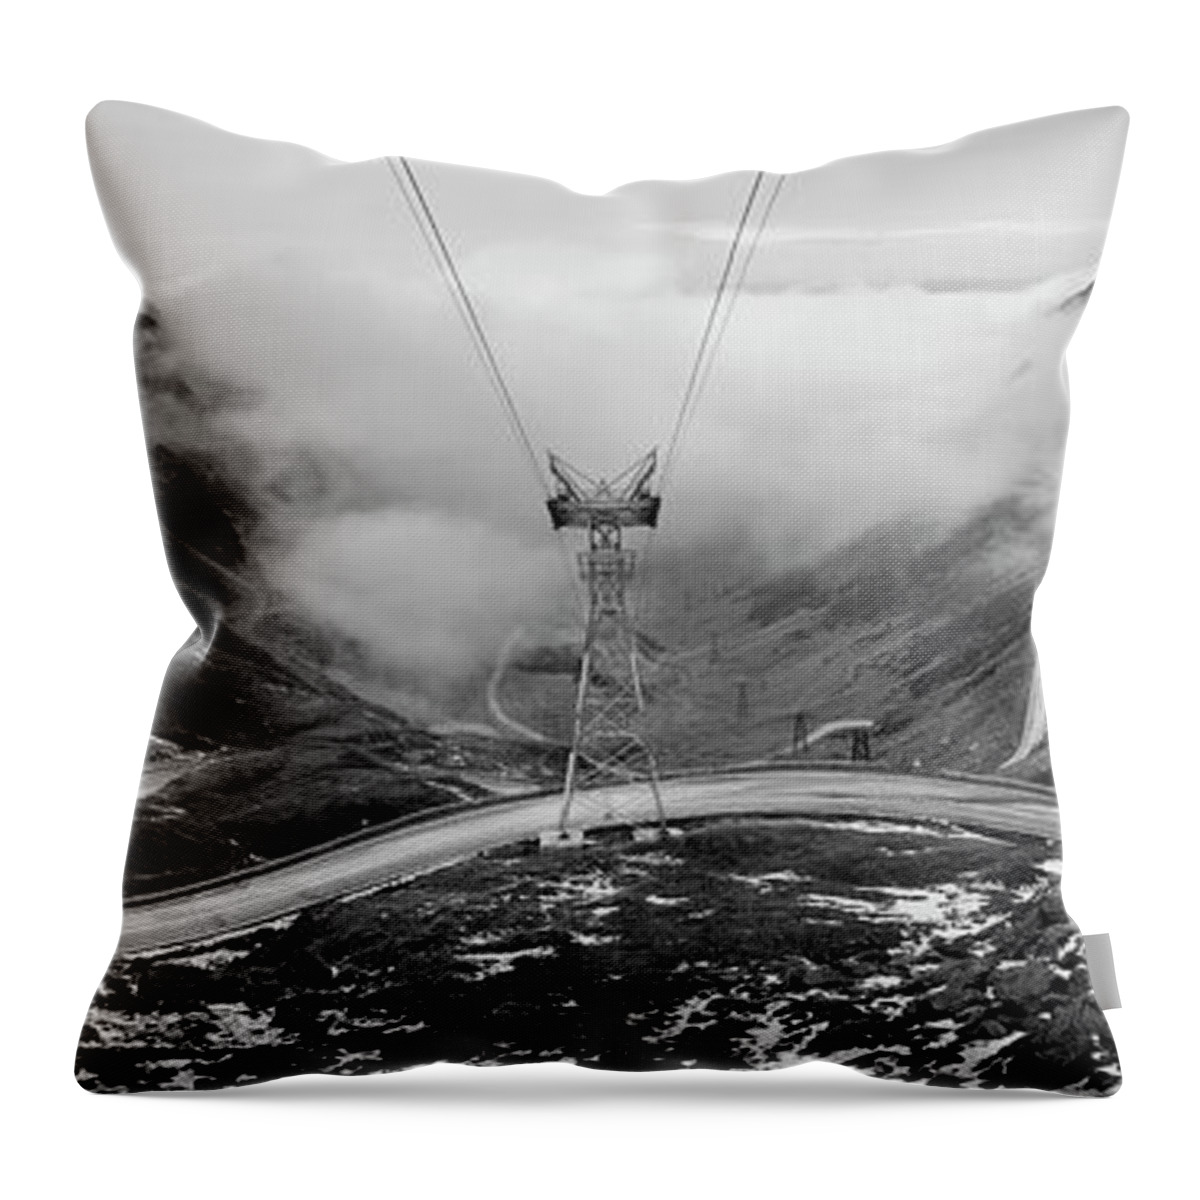  Throw Pillow featuring the photograph Transfagarasan highway in Romania by Patrick Van Os